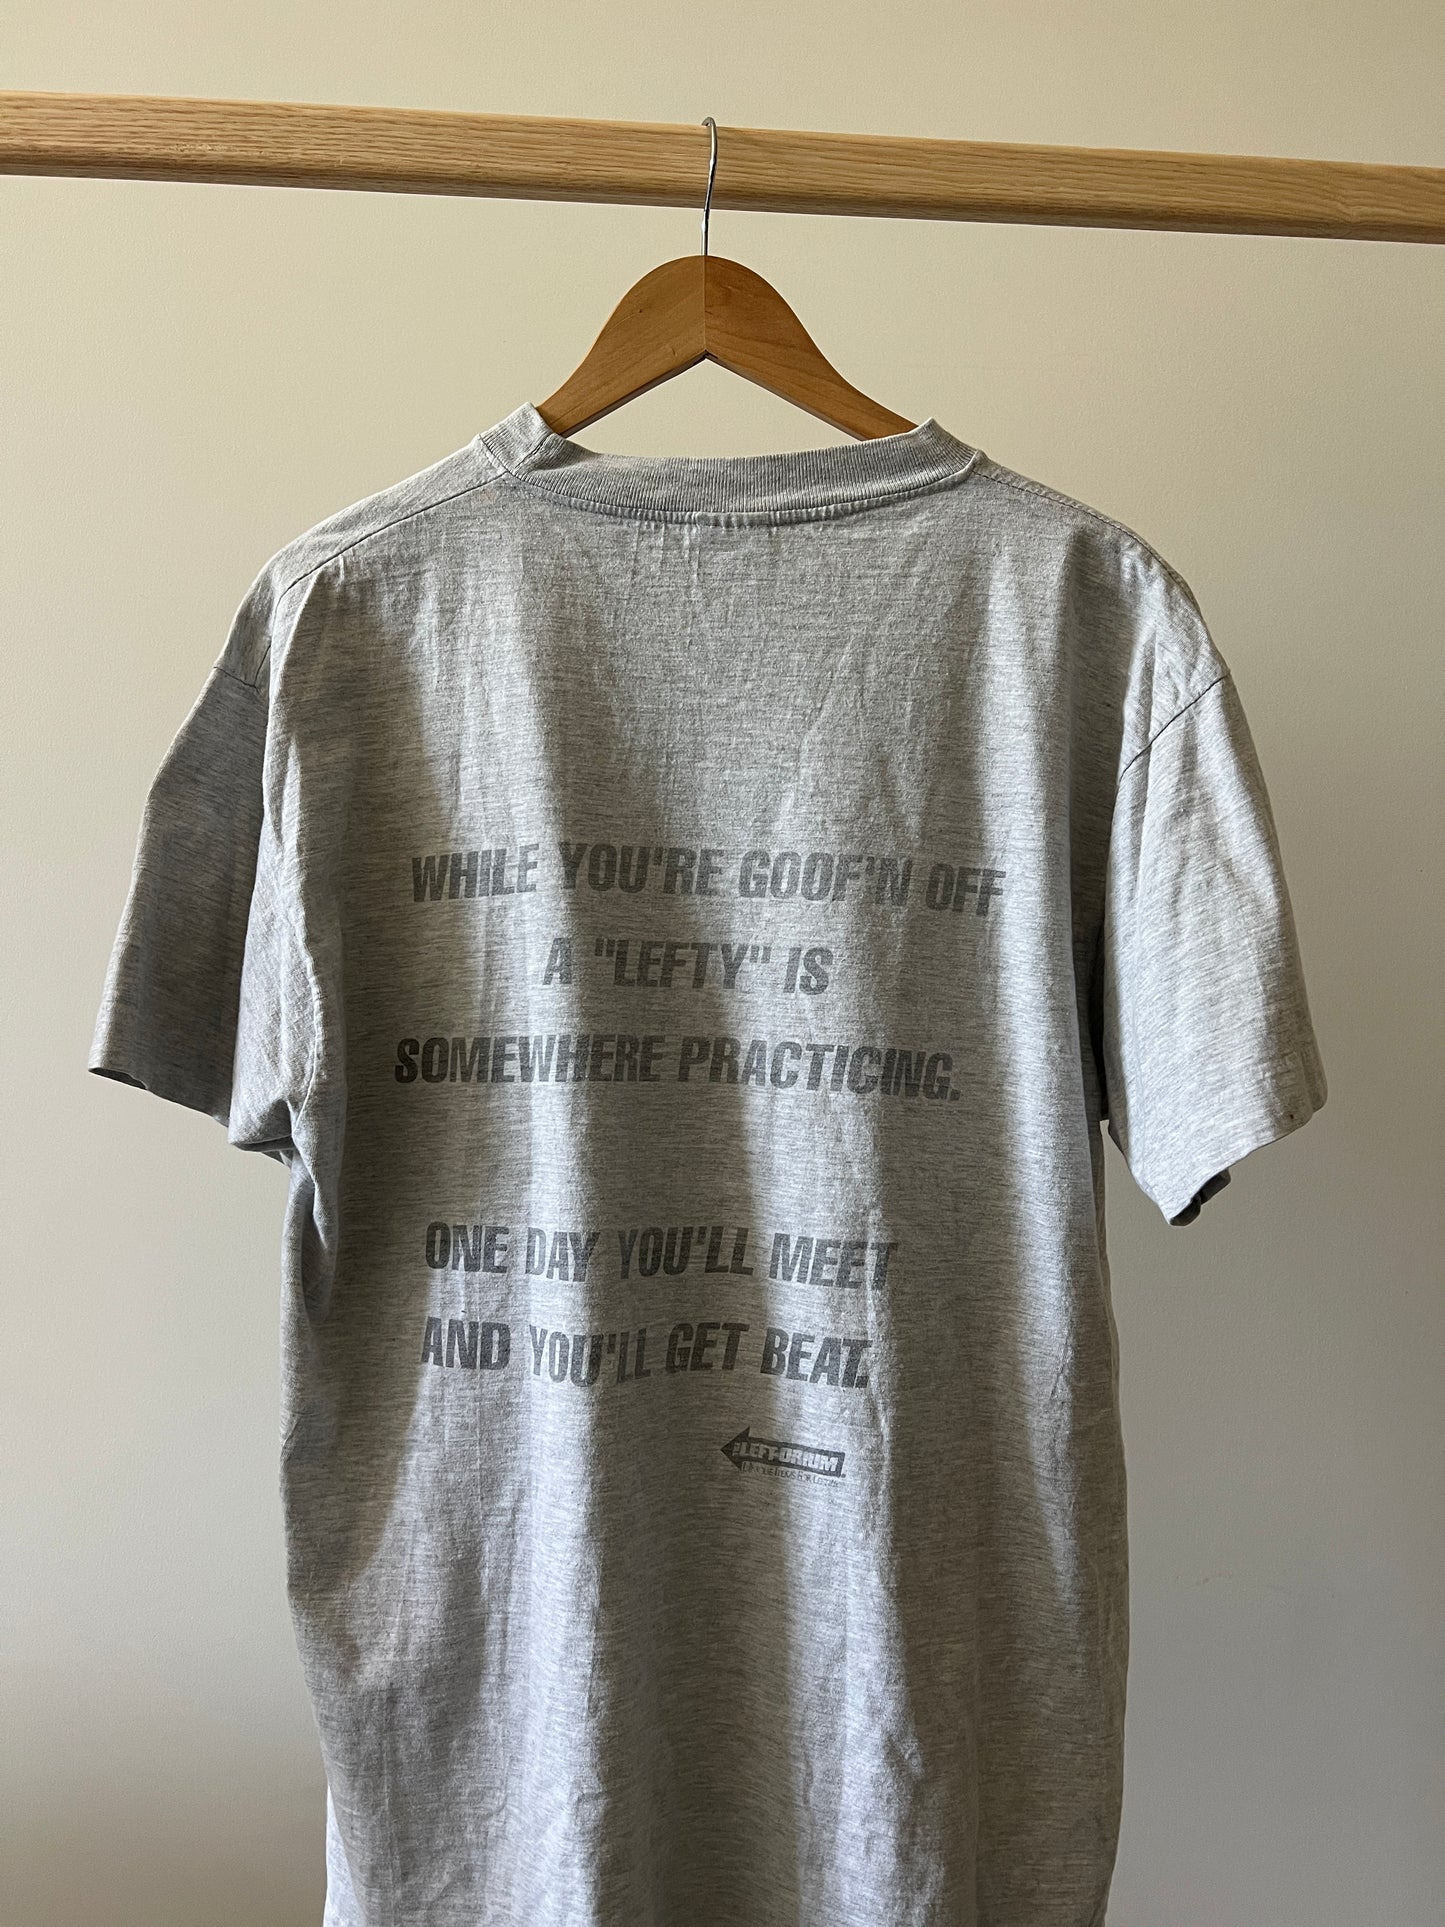 Vintage “Lefty Love” T-Shirt (circa 1990s)